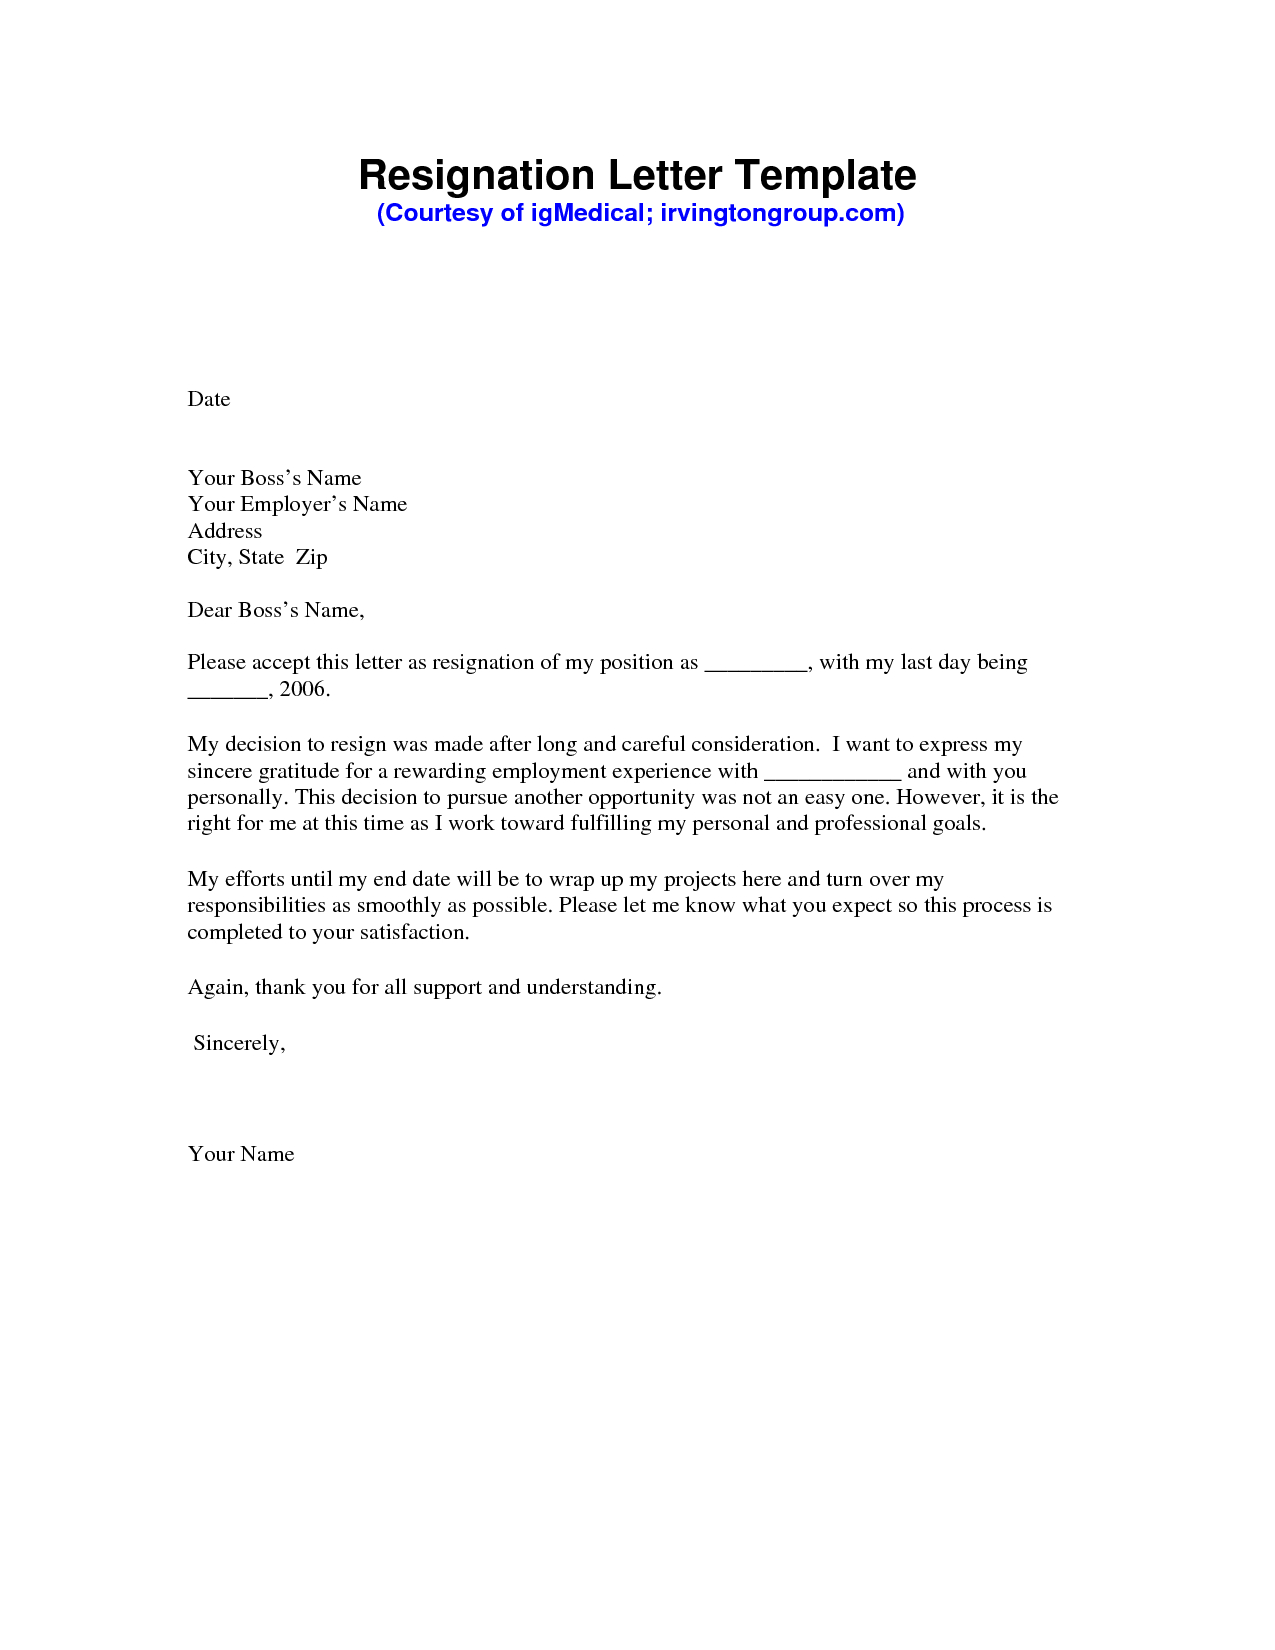 Resignation Letter Sample Pdf | Formal Resignation Letter in Standard Resignation Letter Template